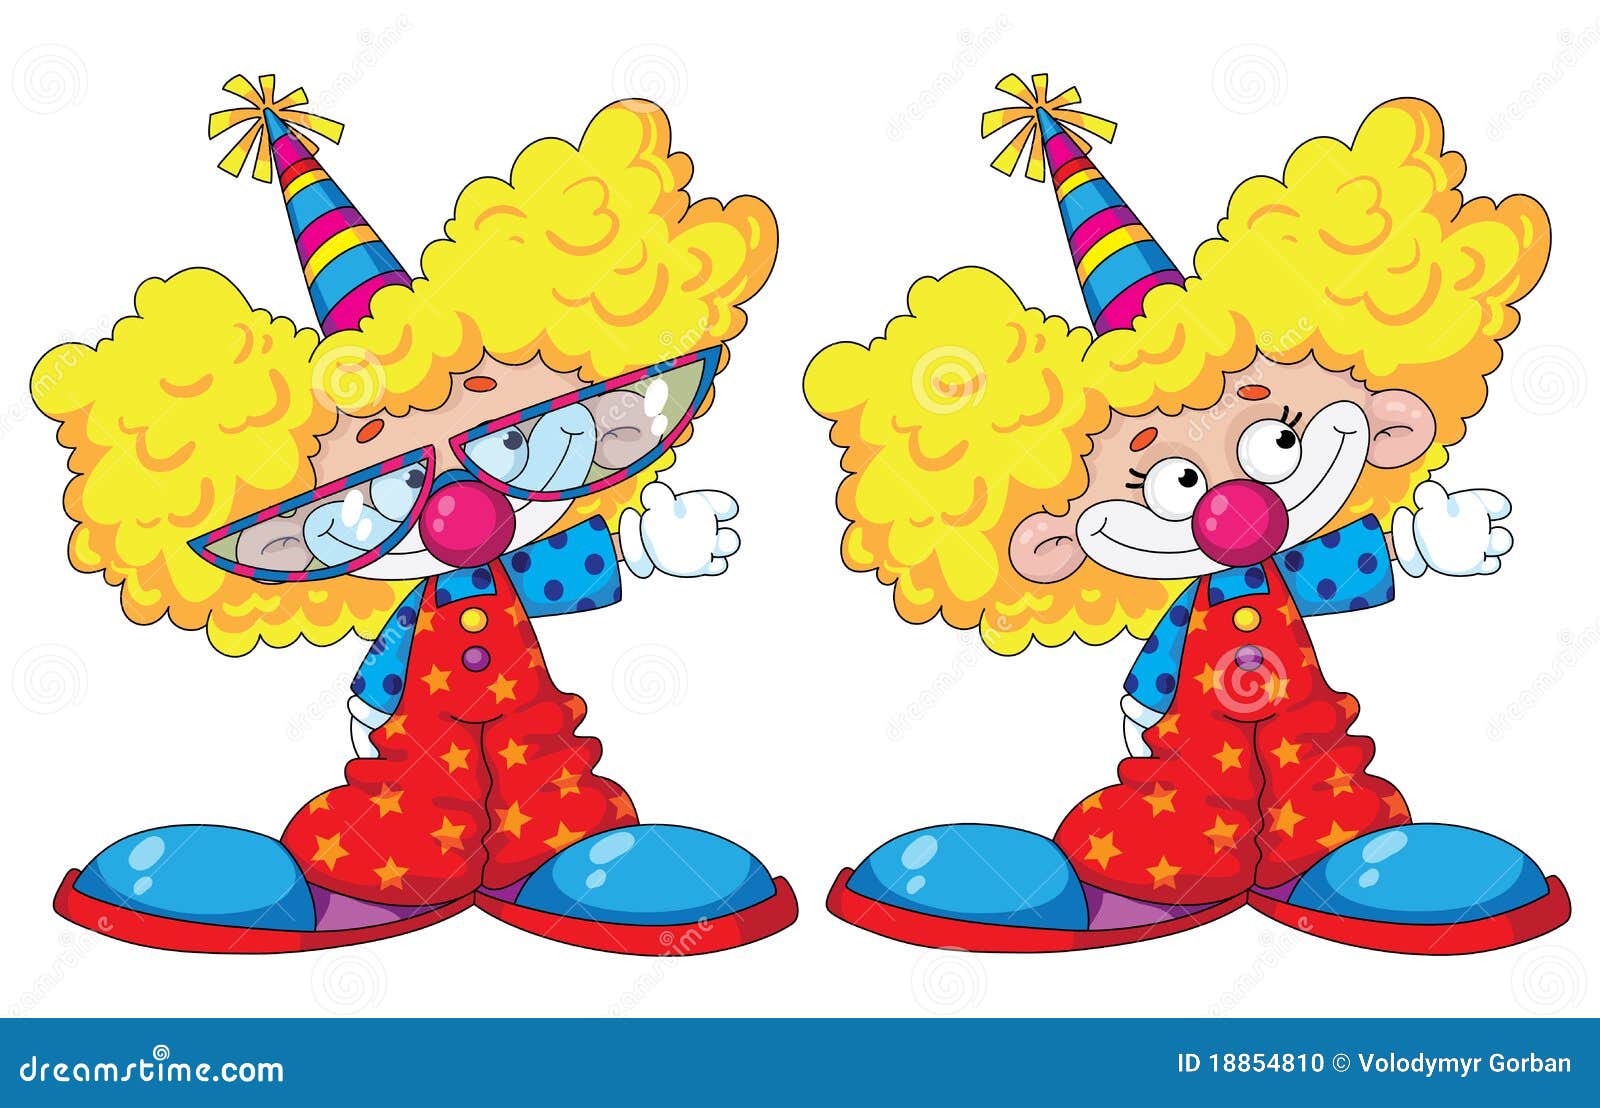 Funny kids clowns stock vector. Illustration of glasses - 18854810